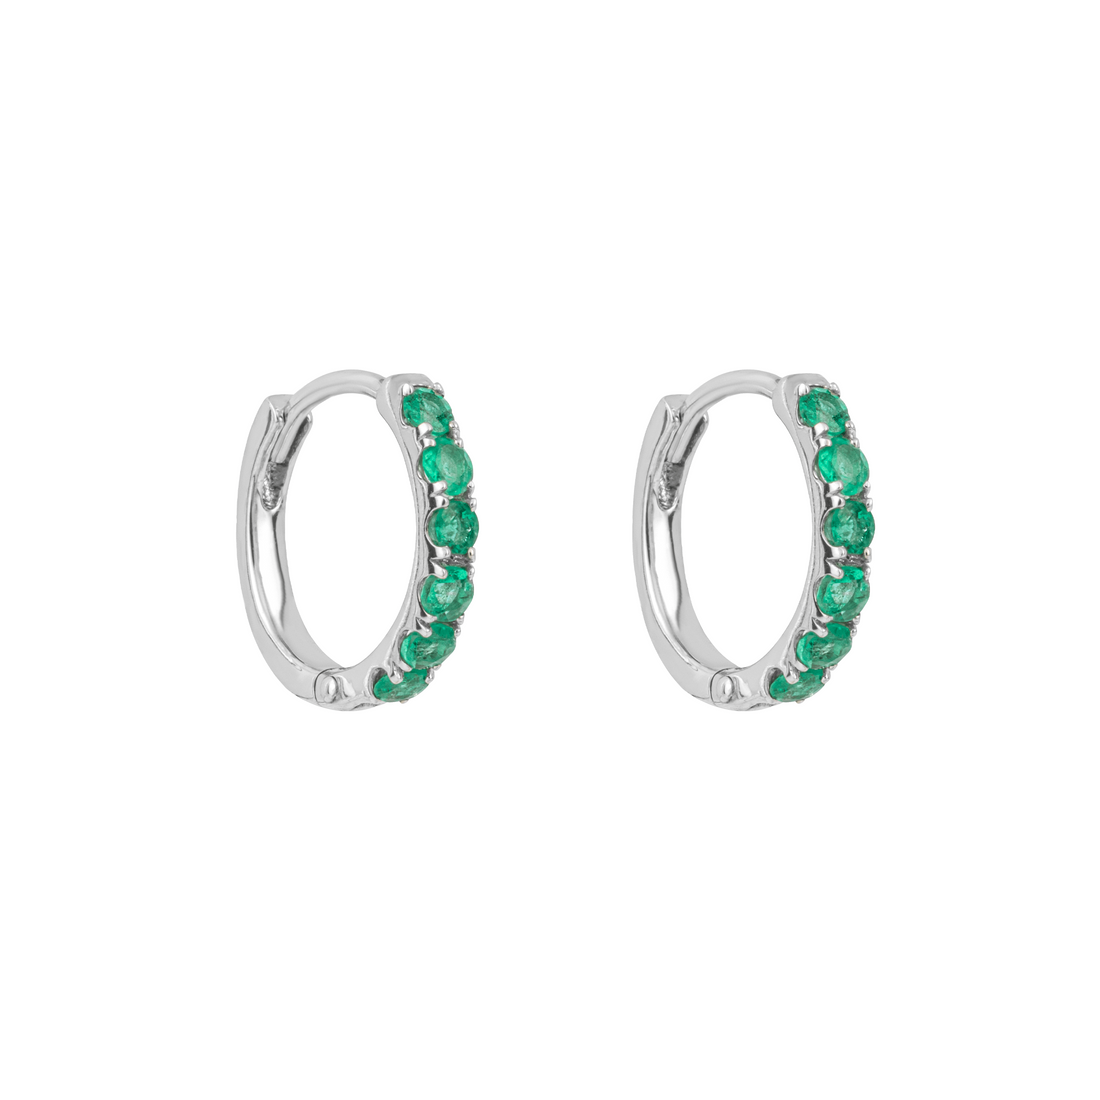 Emerald Hoop Earrings in 9ct White Gold - Robert Anthony Jewellers, Edinburgh